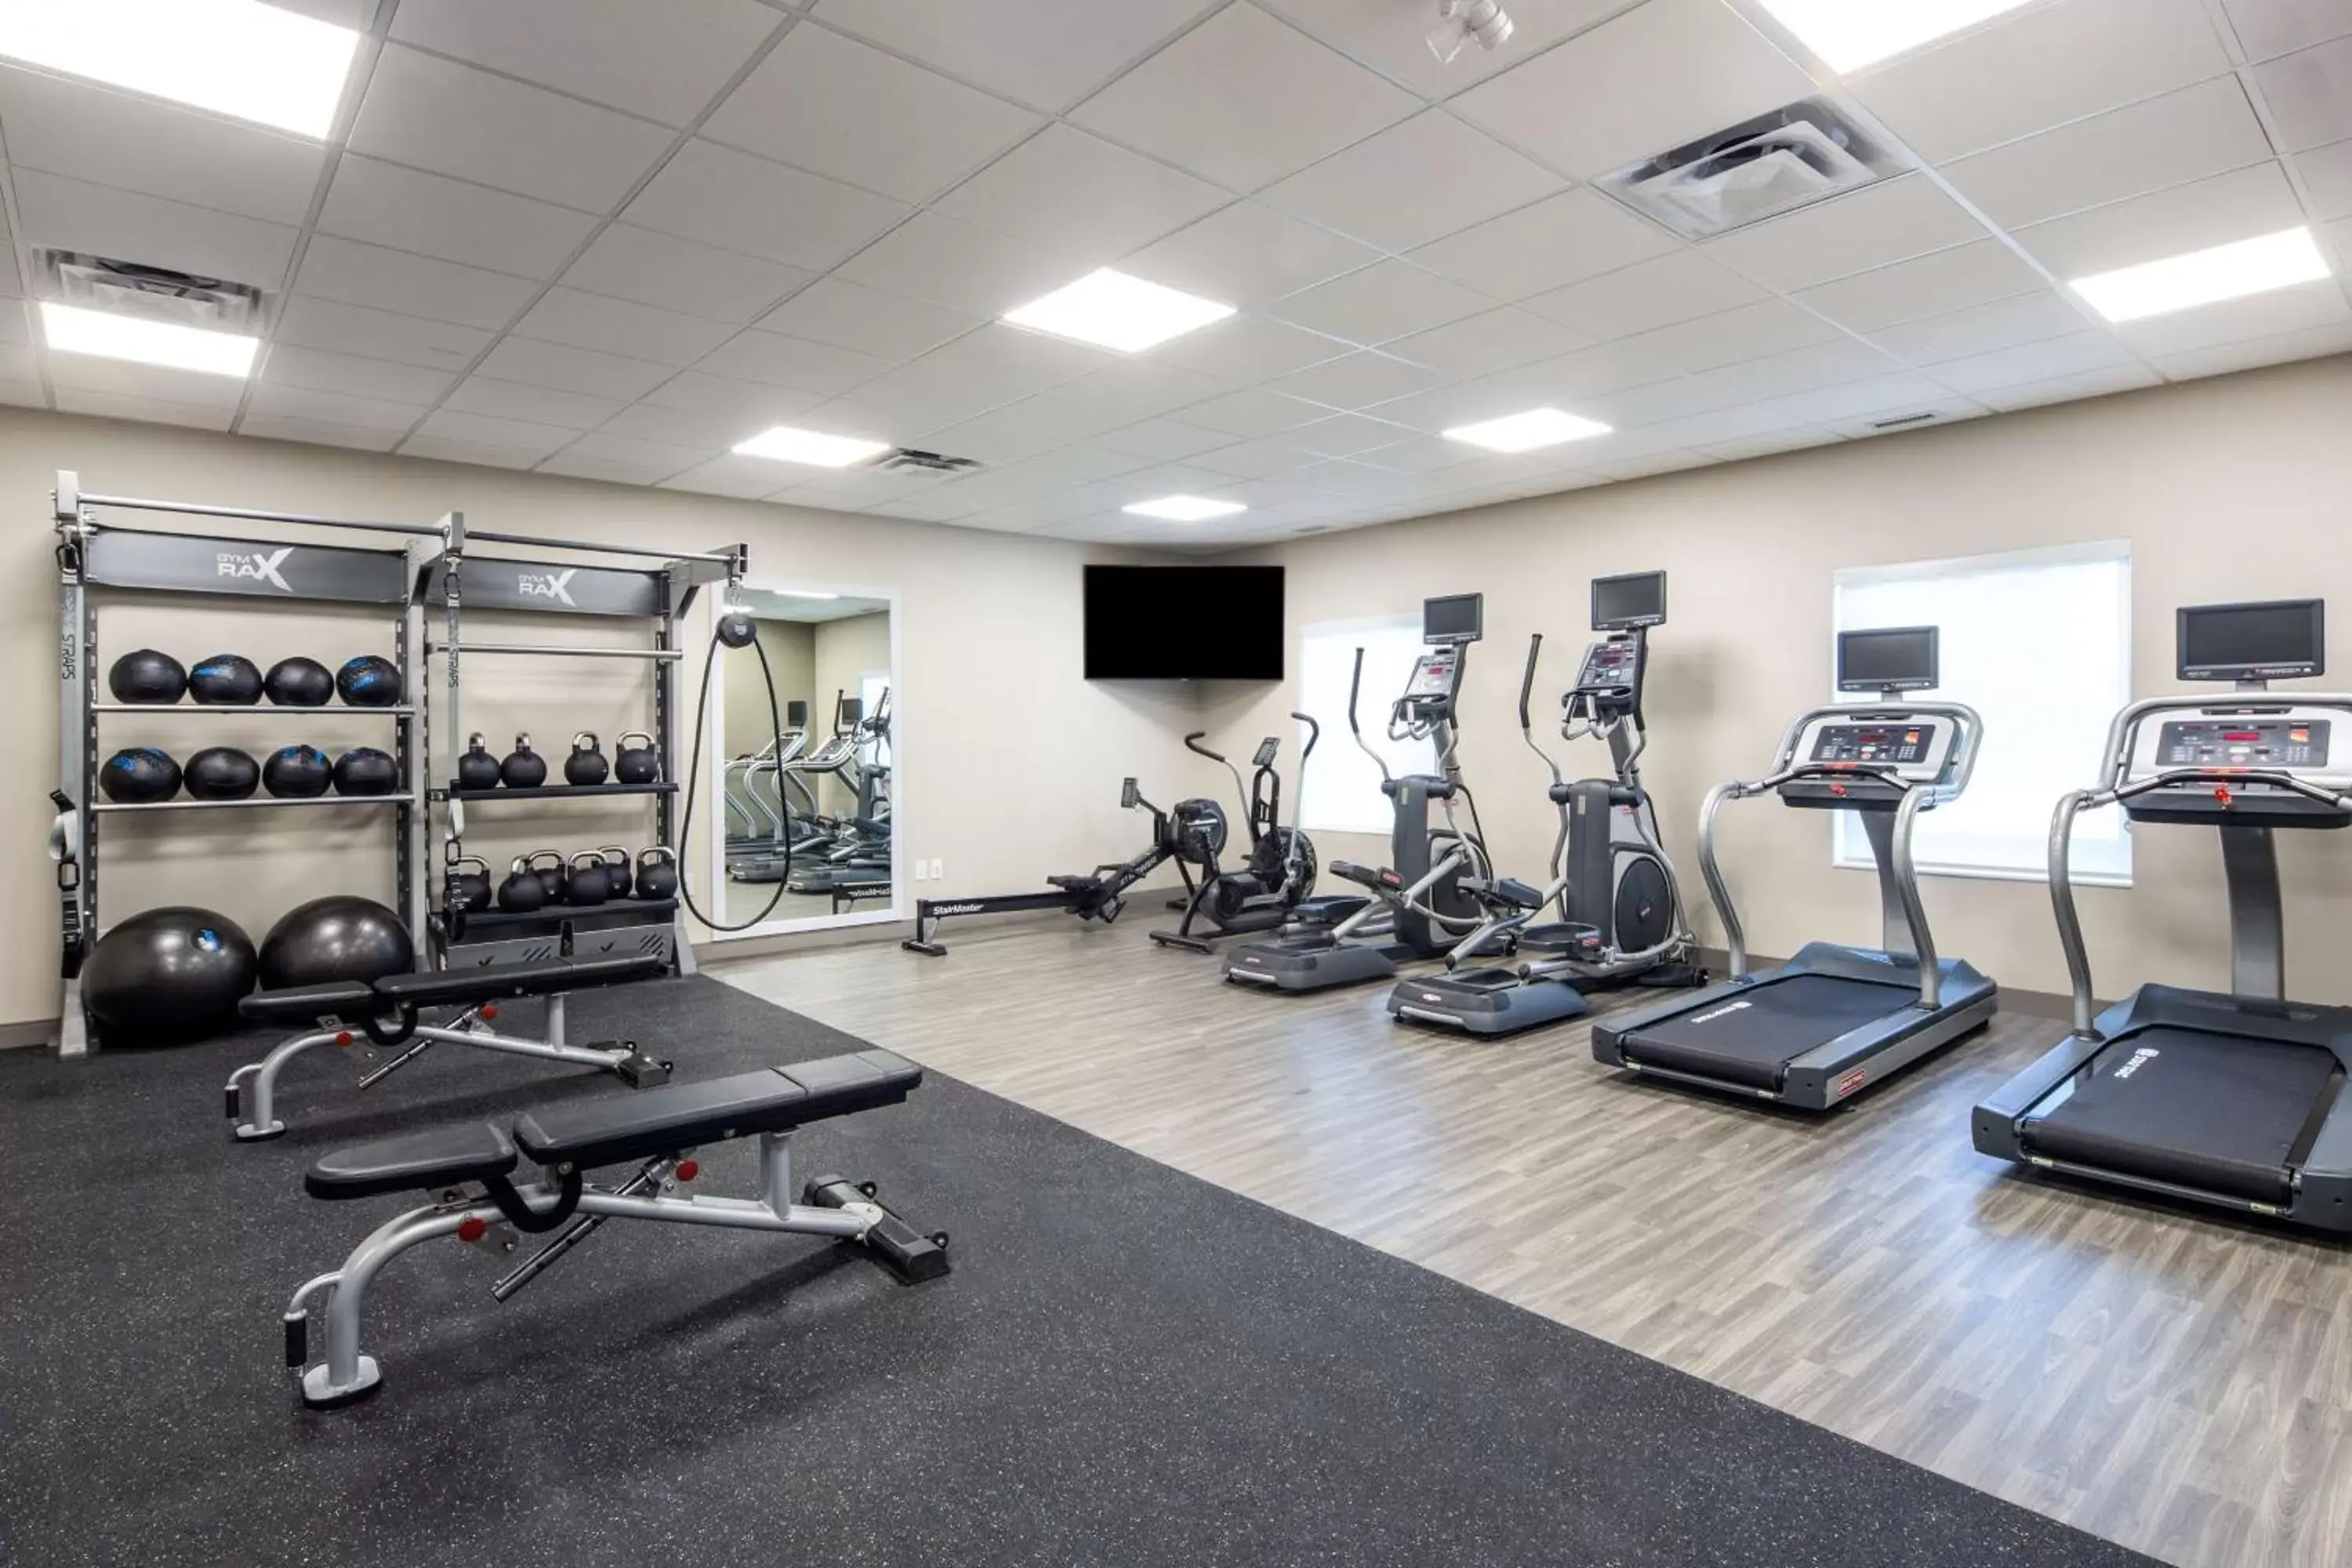 Fitness centre/facilities, Fitness Center/Facilities in Hampton Inn & Suites Edmonton St. Albert, Ab